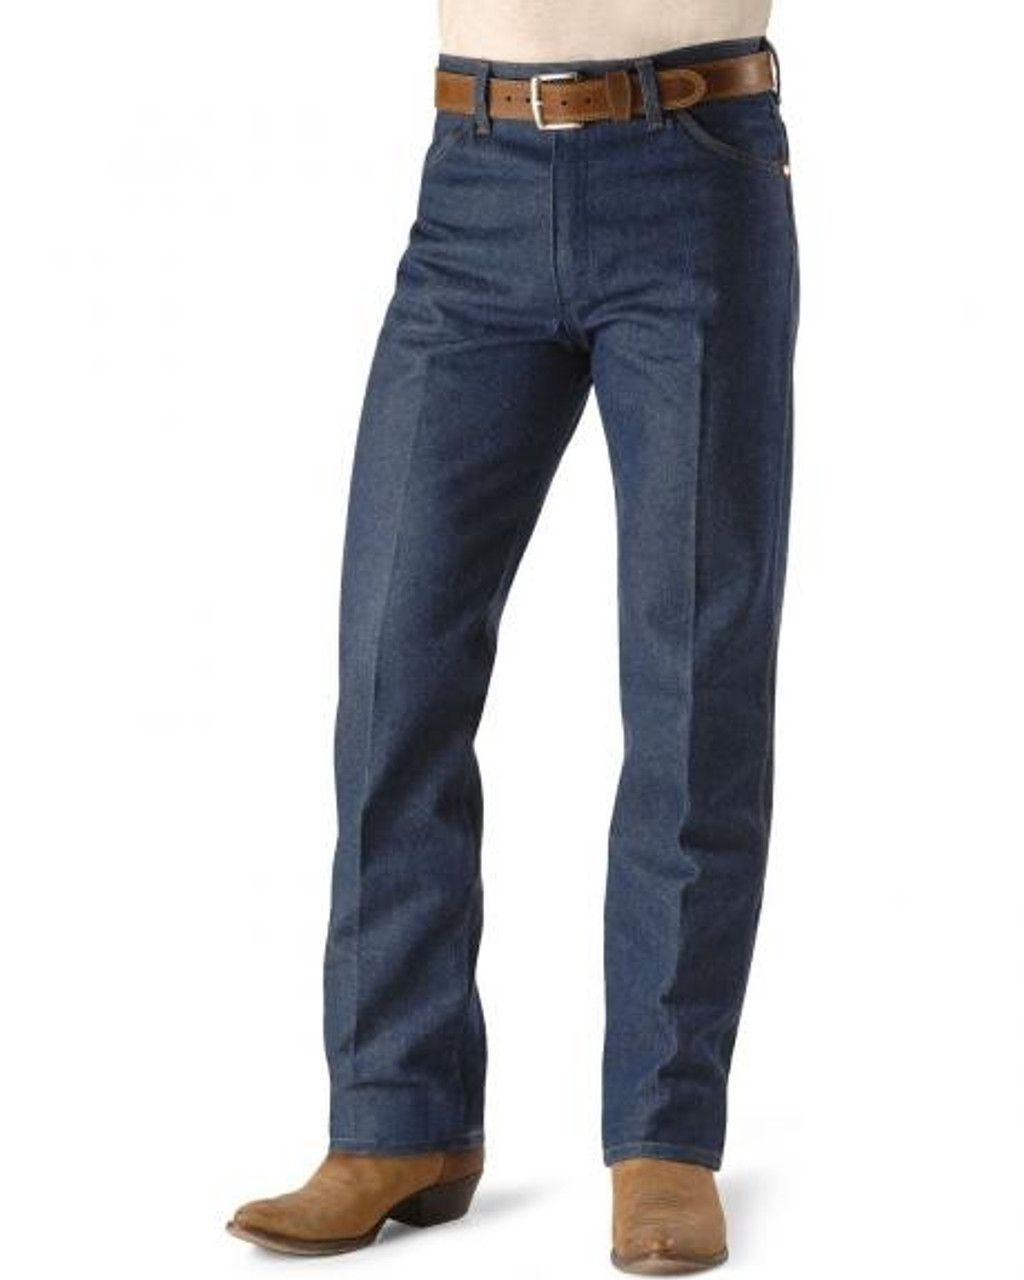 WranglerÂ® Men's Original Fit Rigid Denim Jeans